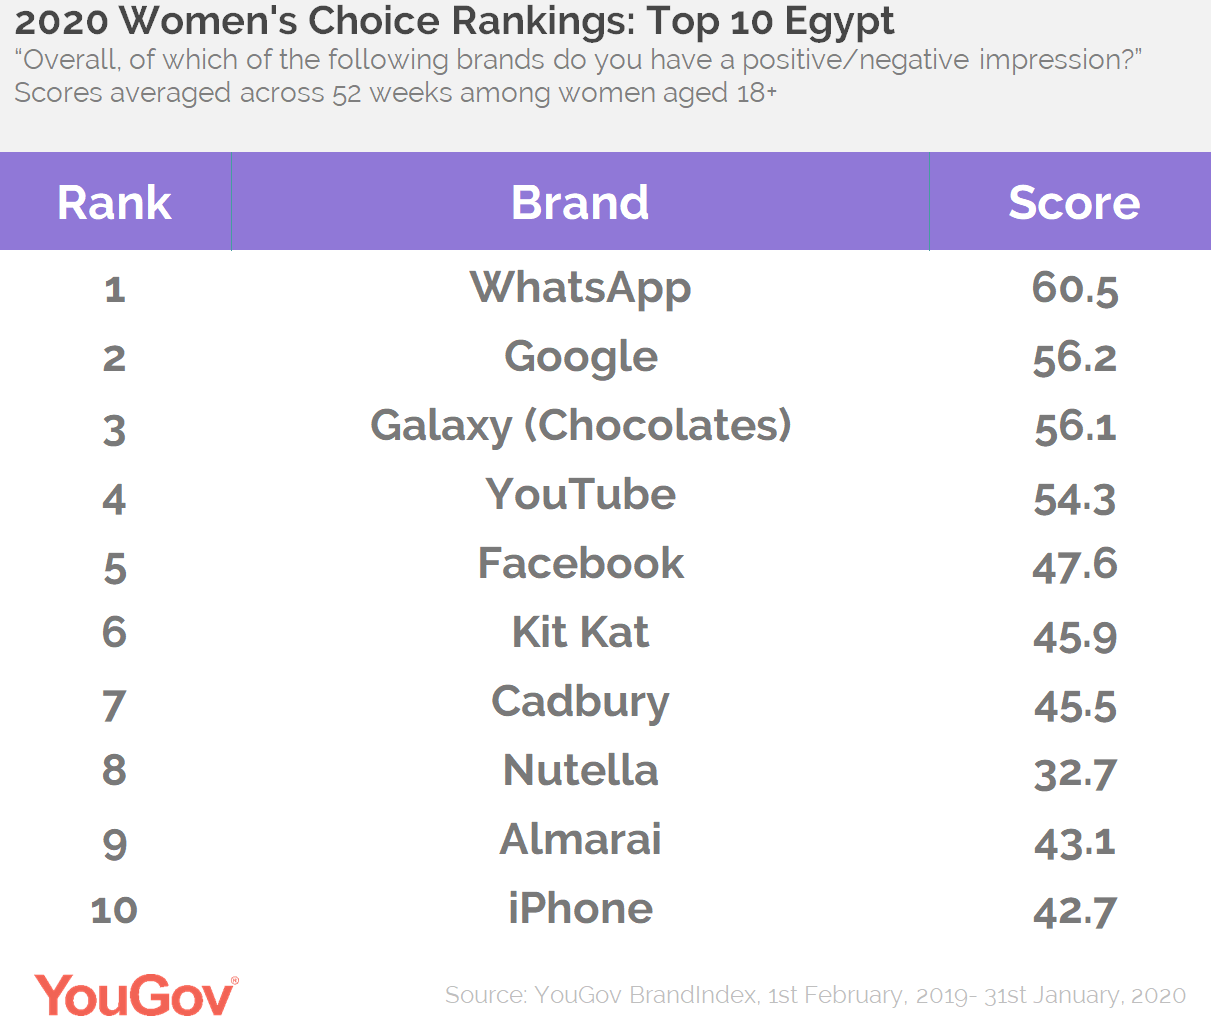 Top 10 Egypt